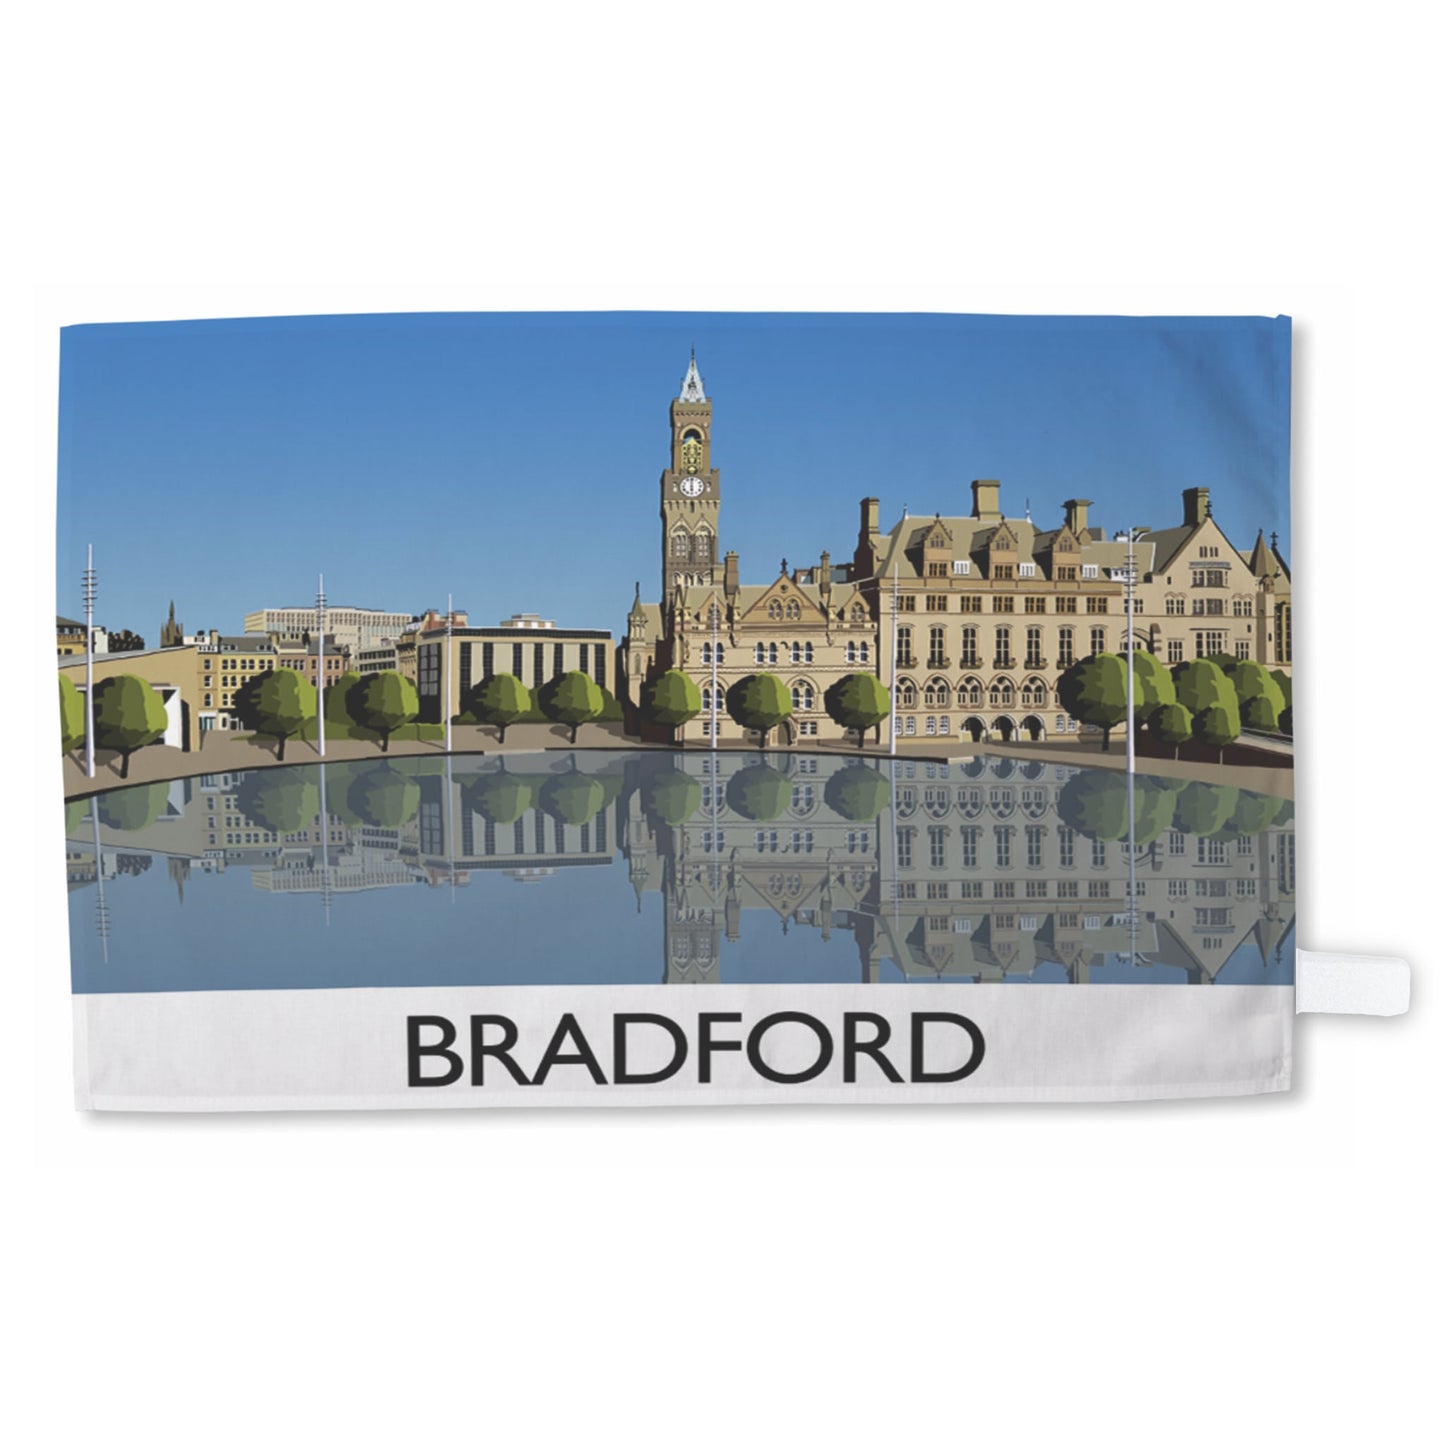 Bradford Tea Towel - The Great Yorkshire Shop